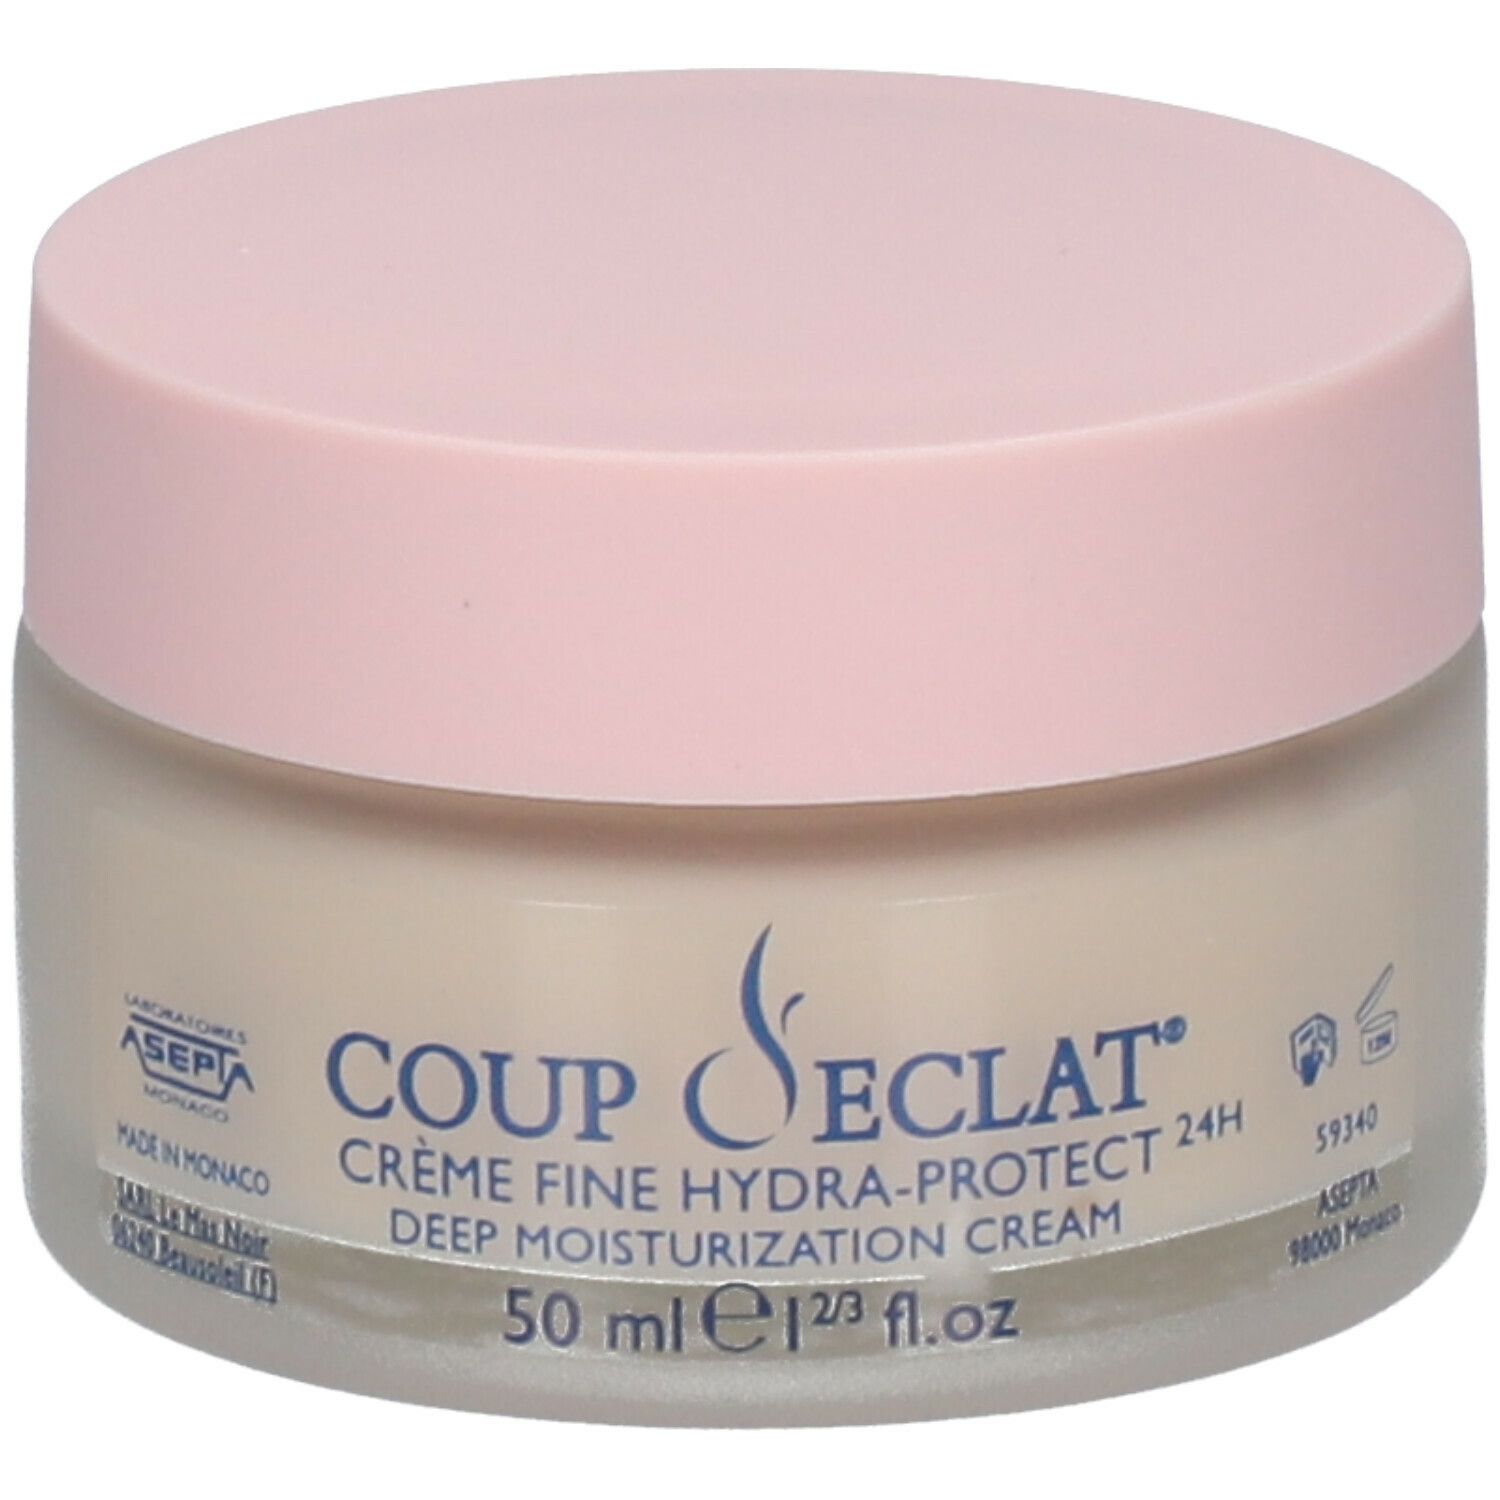 Coup d'Eclat® Crème Fine Hydra-Protect 24H